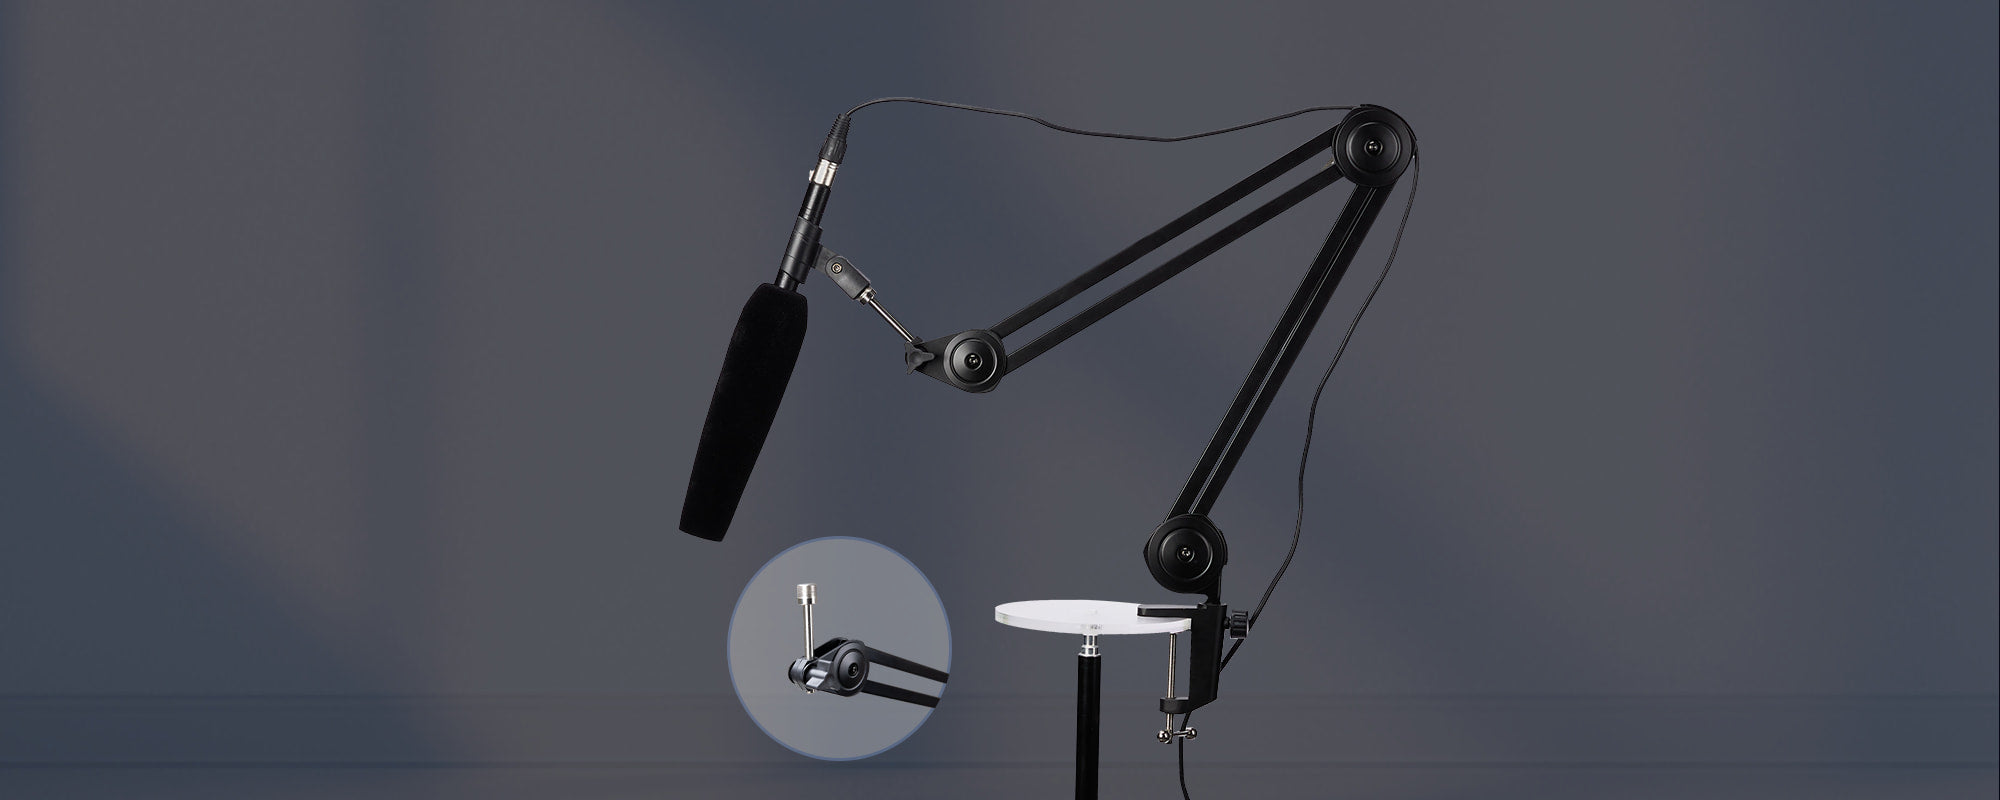 studio microphone stand 3d max